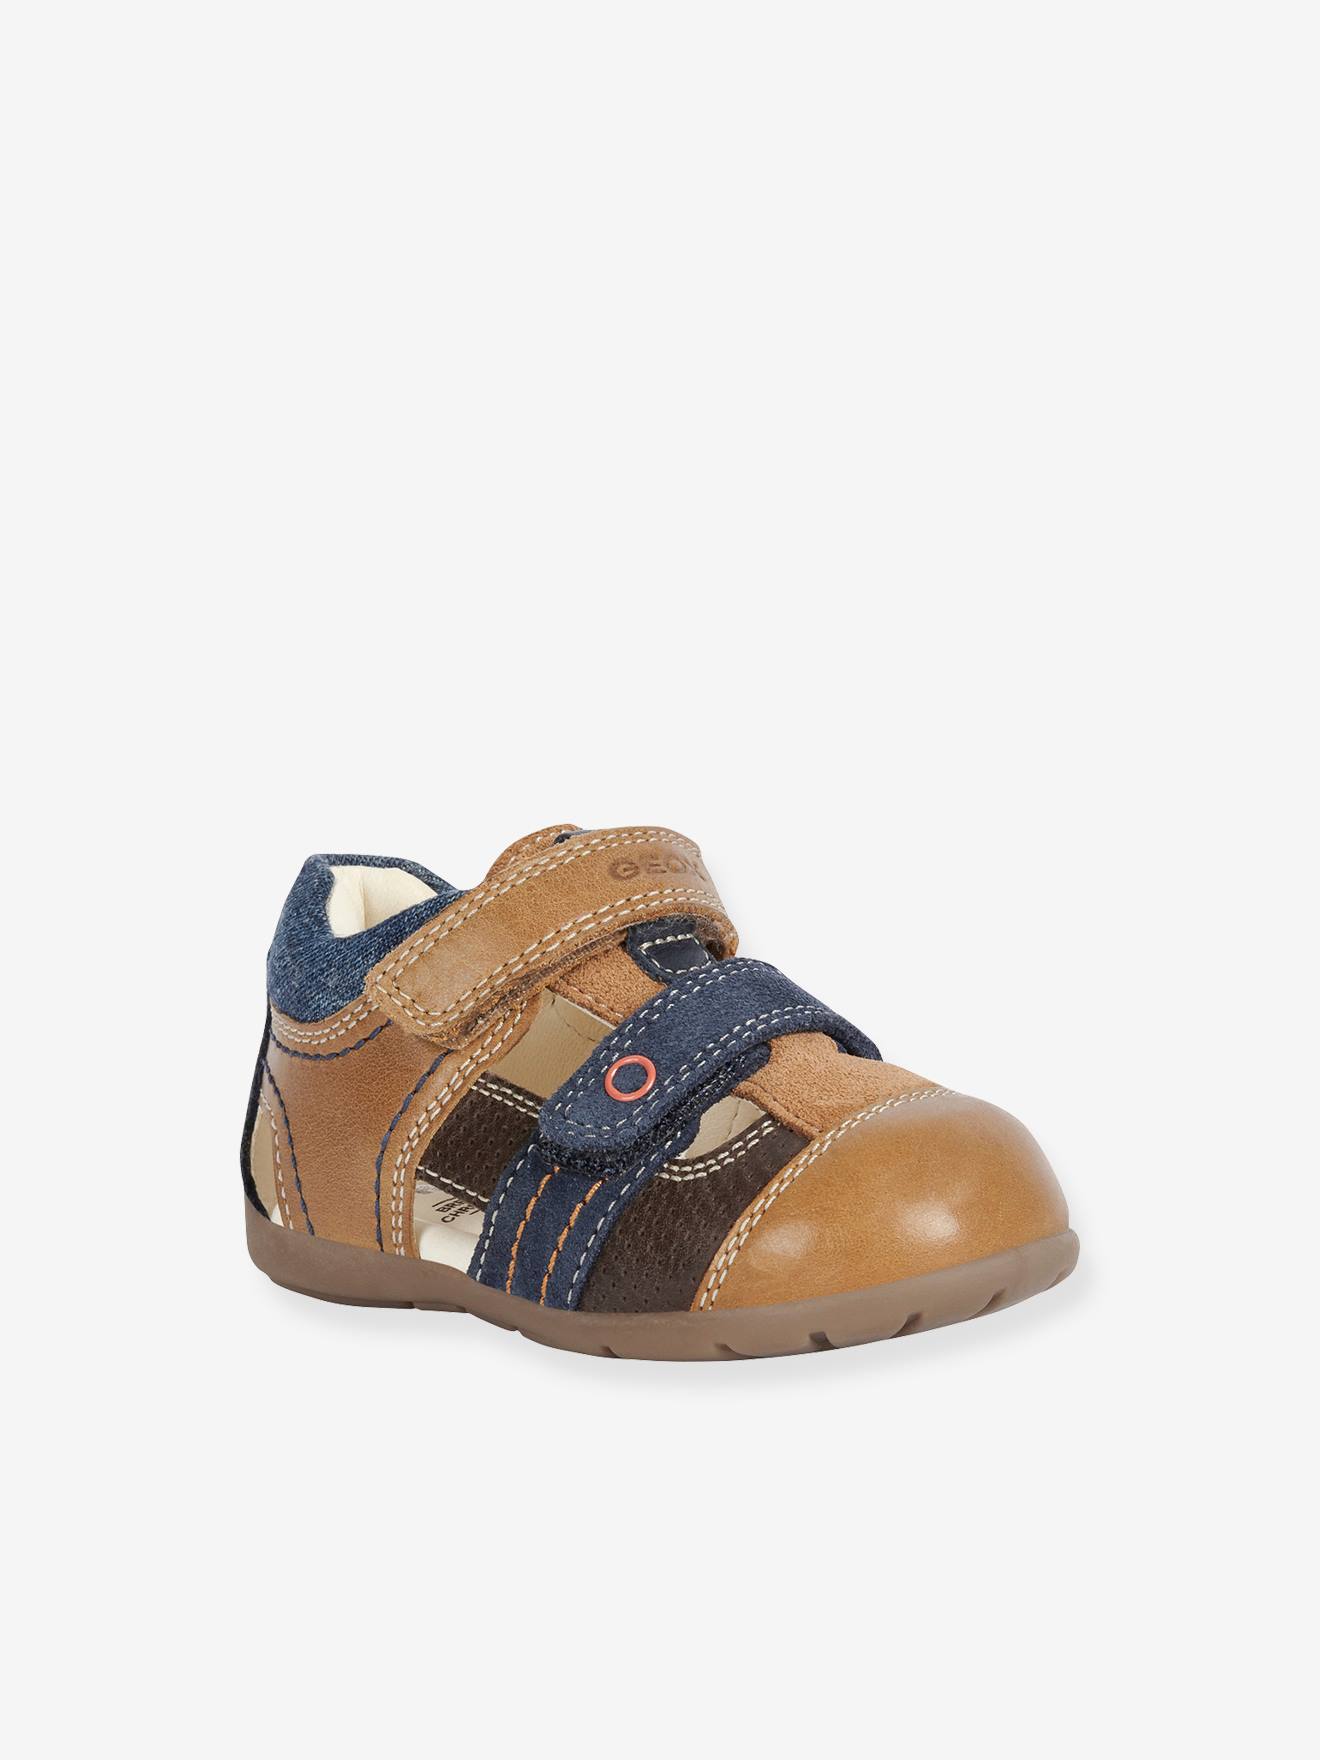 Raza humana Y así calificación Sandals for Babies, Kaytan by GEOX® - beige, Shoes | Vertbaudet